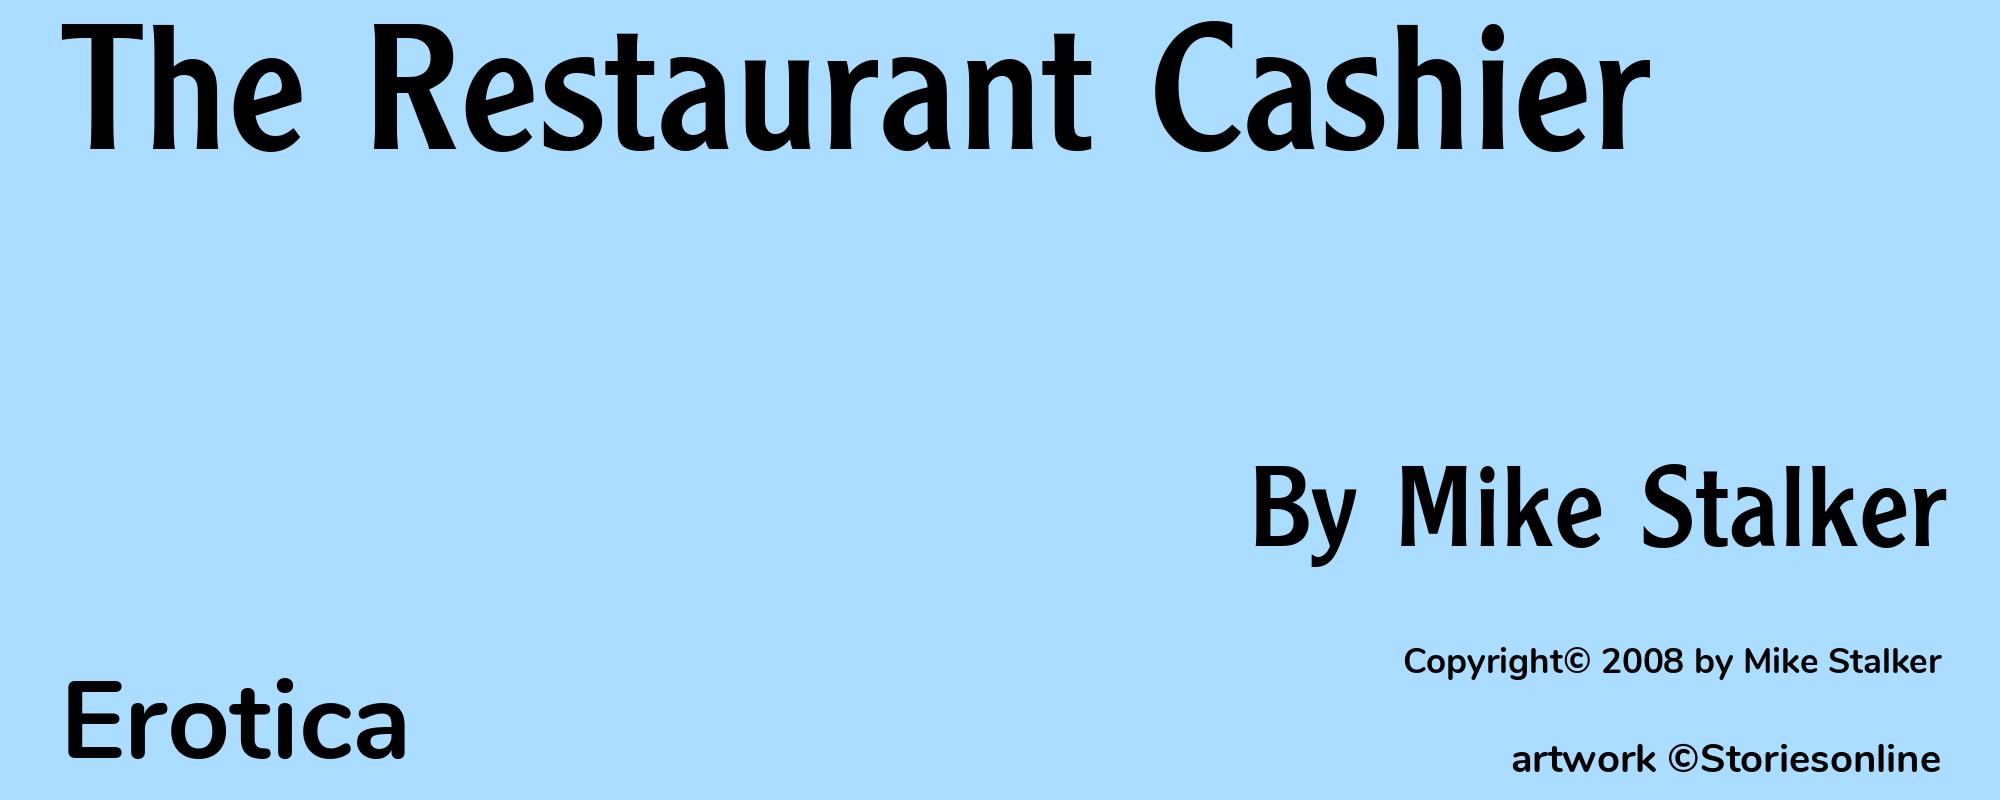 The Restaurant Cashier - Cover